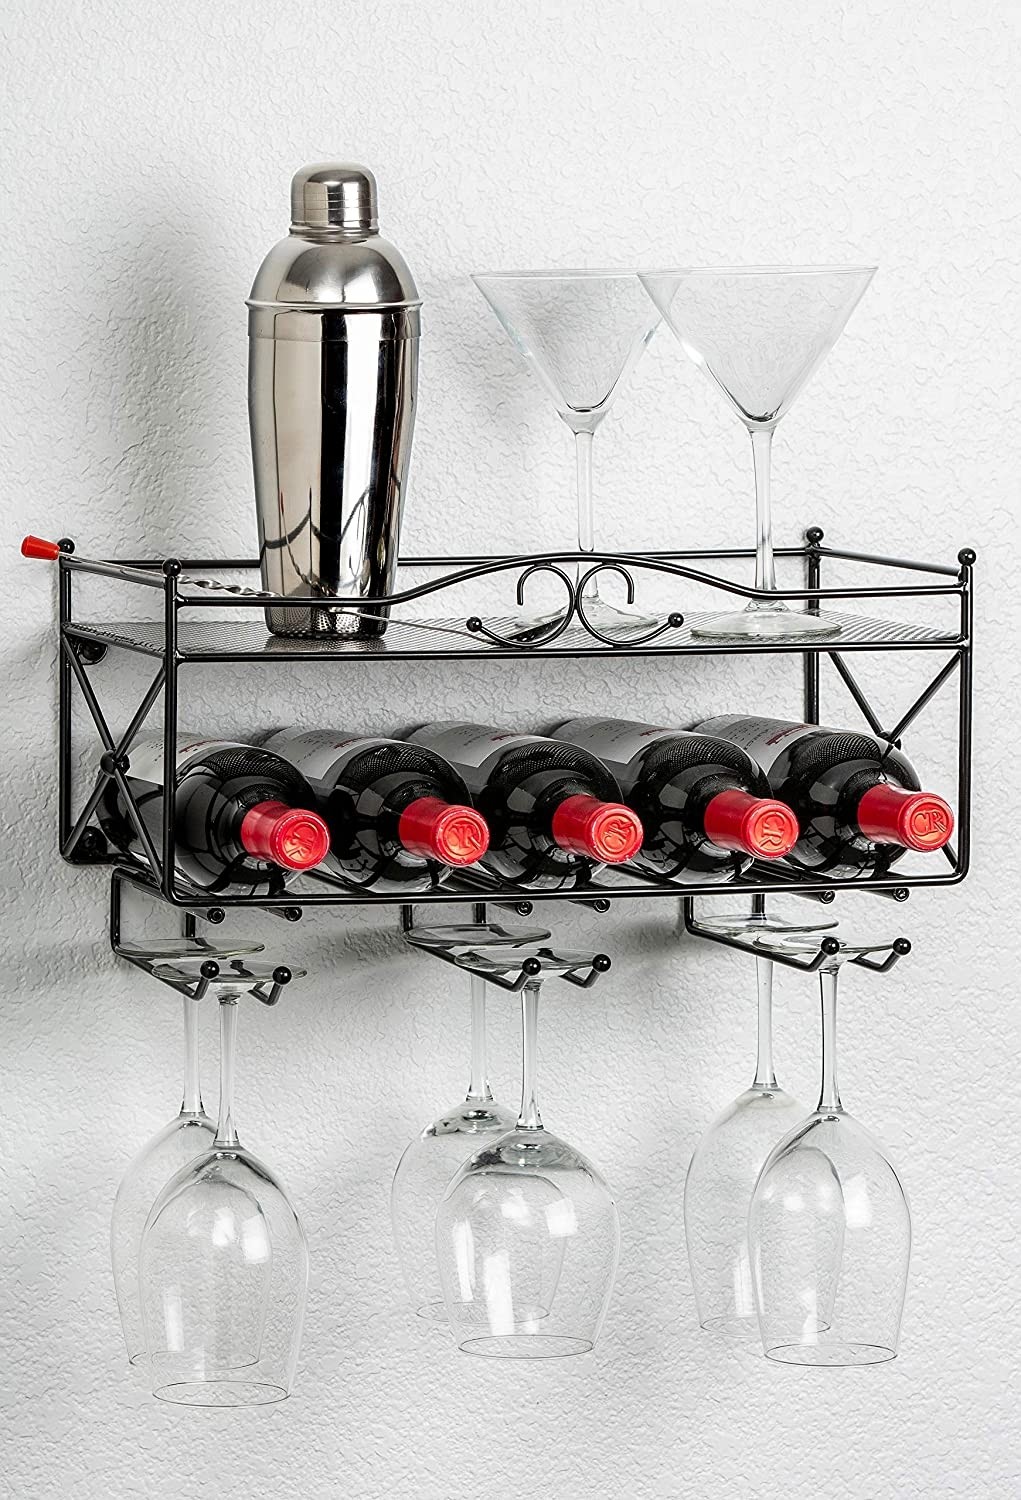 Mango steam wall mounted wine rack with stemware holder